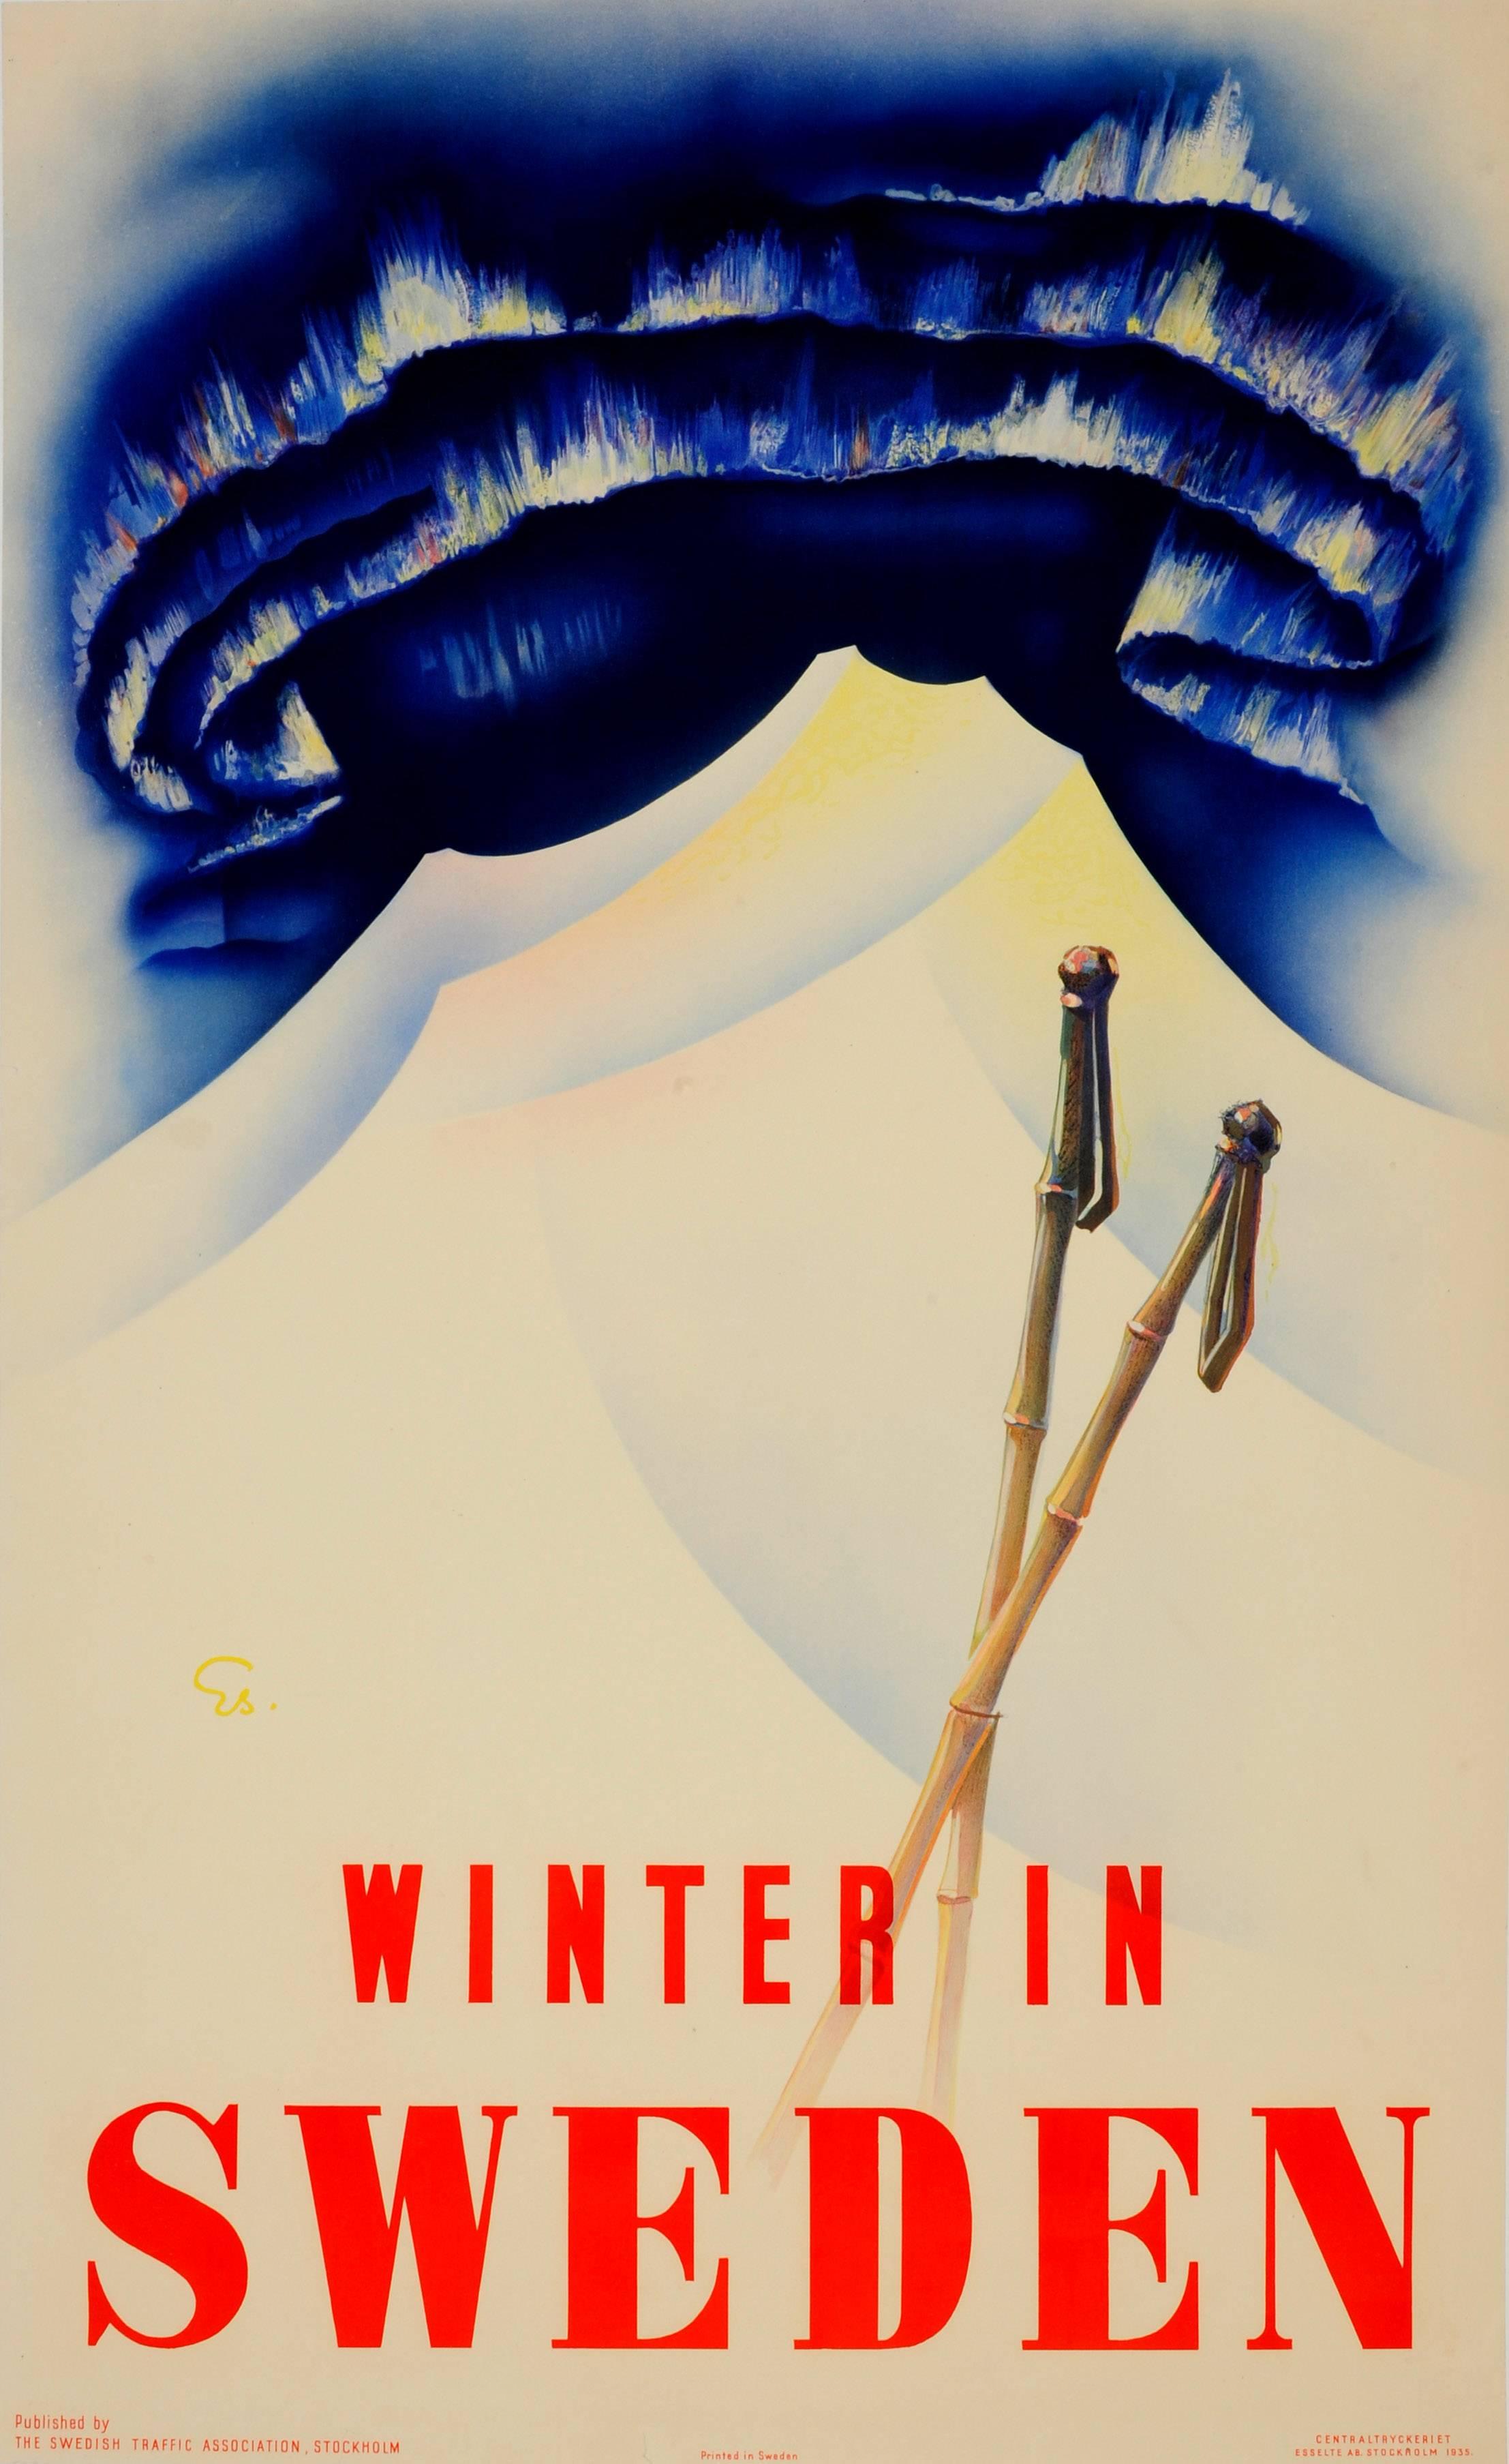 Unknown Print - Original Vintage Ski Sport Poster Featuring The Northern Lights Winter In Sweden